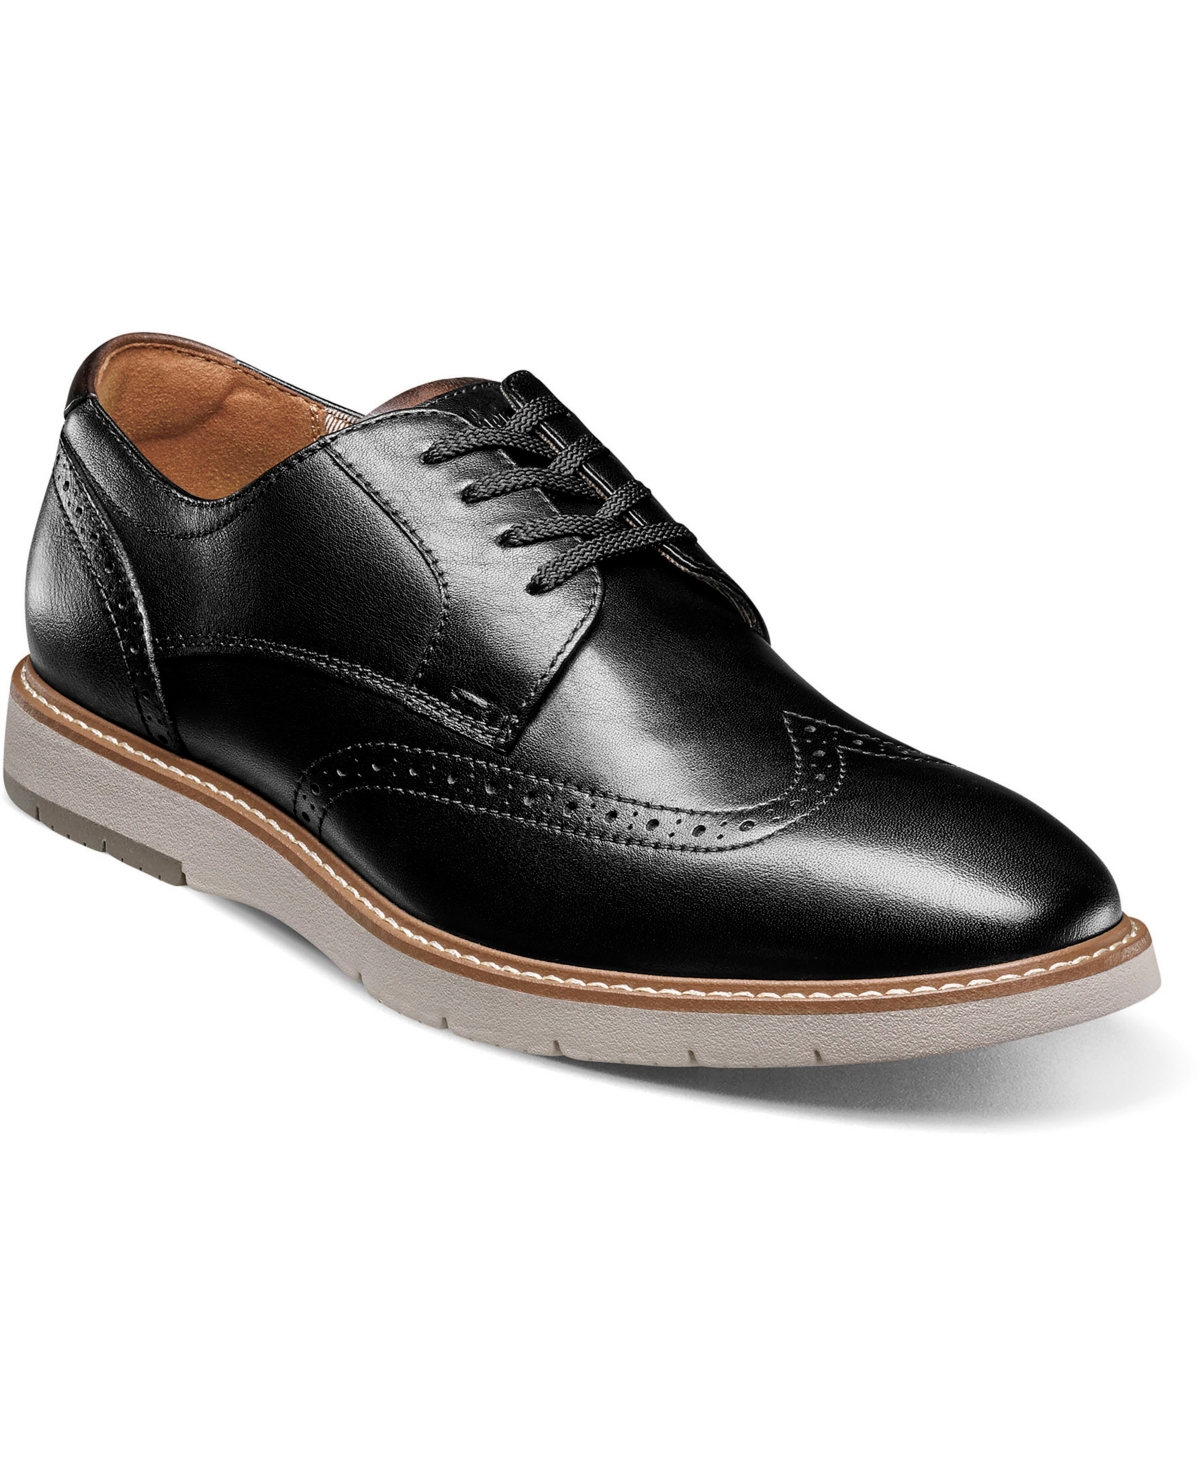 Men's Vibe Wingtip Oxford Dress Shoe - Cognac Multi